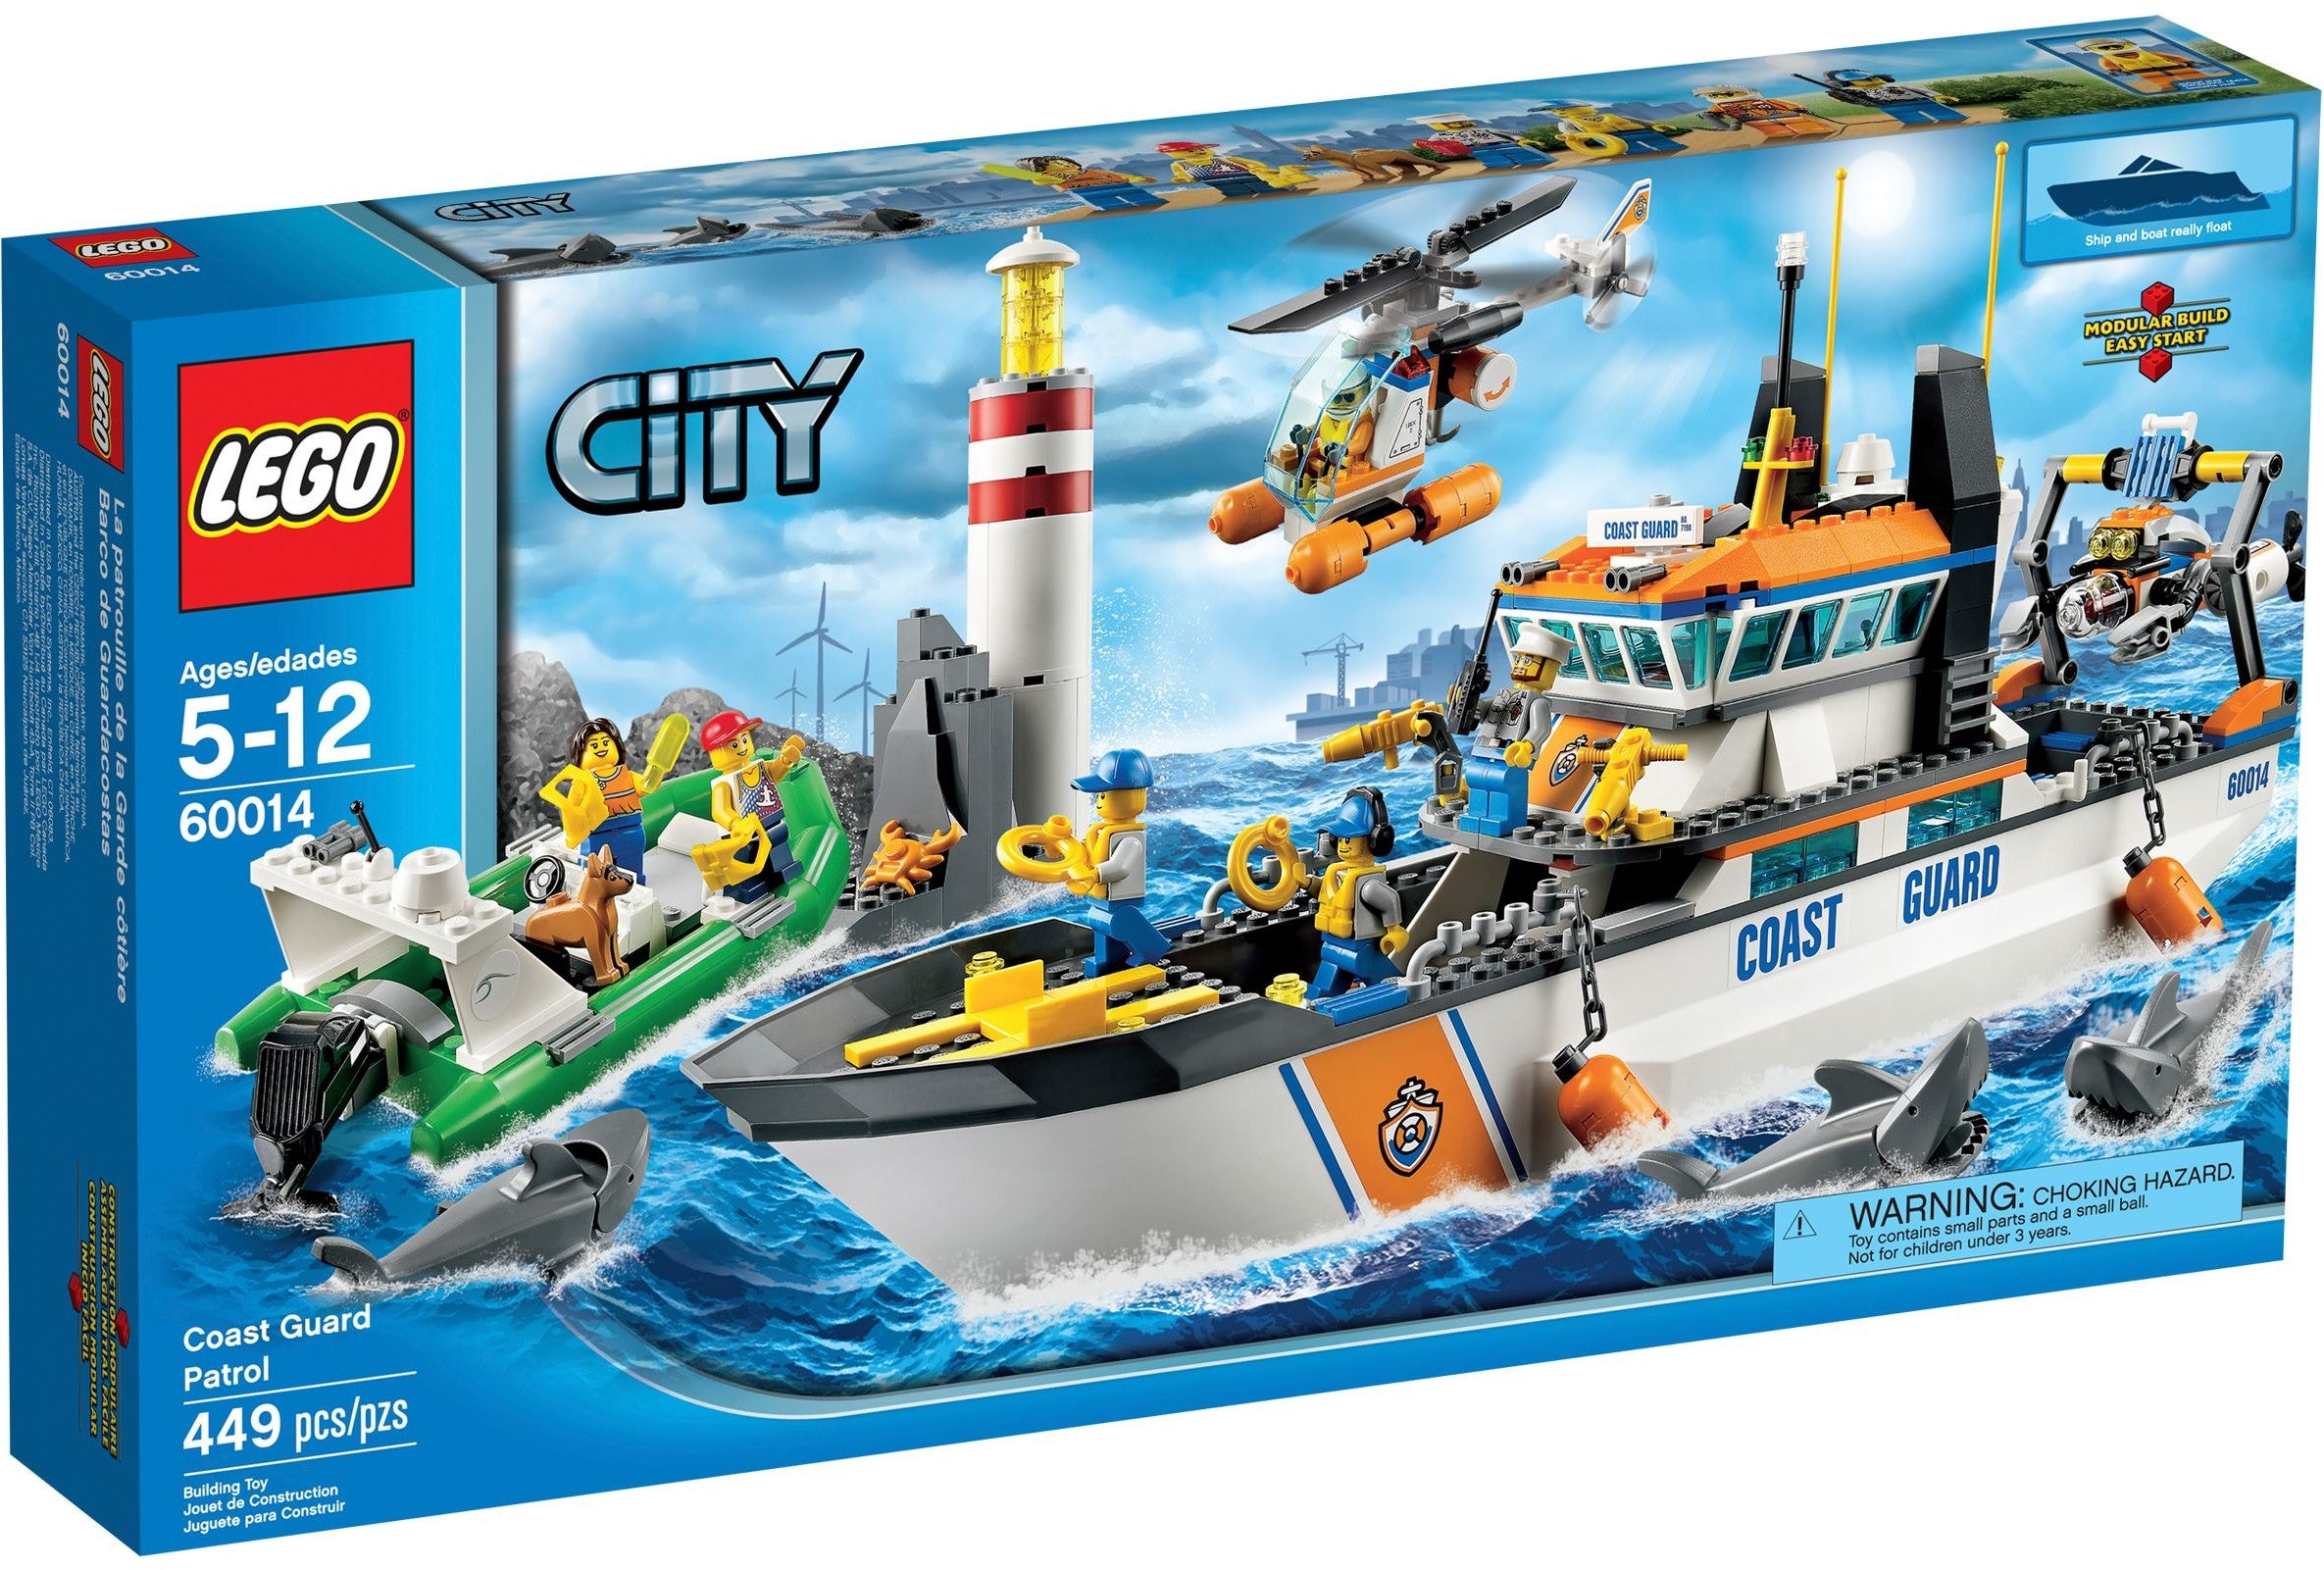 Lego City 60014 - Coast Guard Patrol